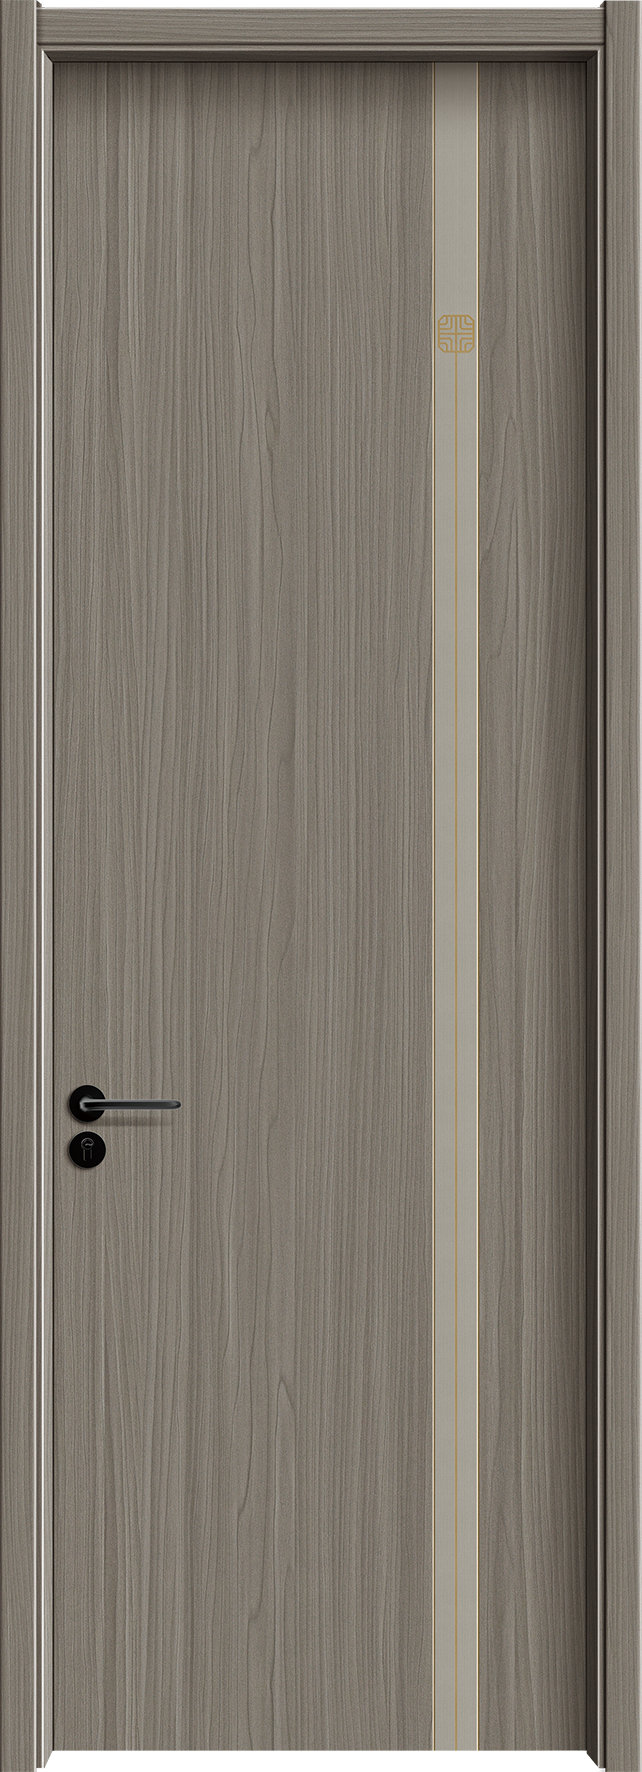 MELAMINE FINISHING  - CARBON  WOOD DOOR (CARBON CRYSTAL BOARD) 2509-5